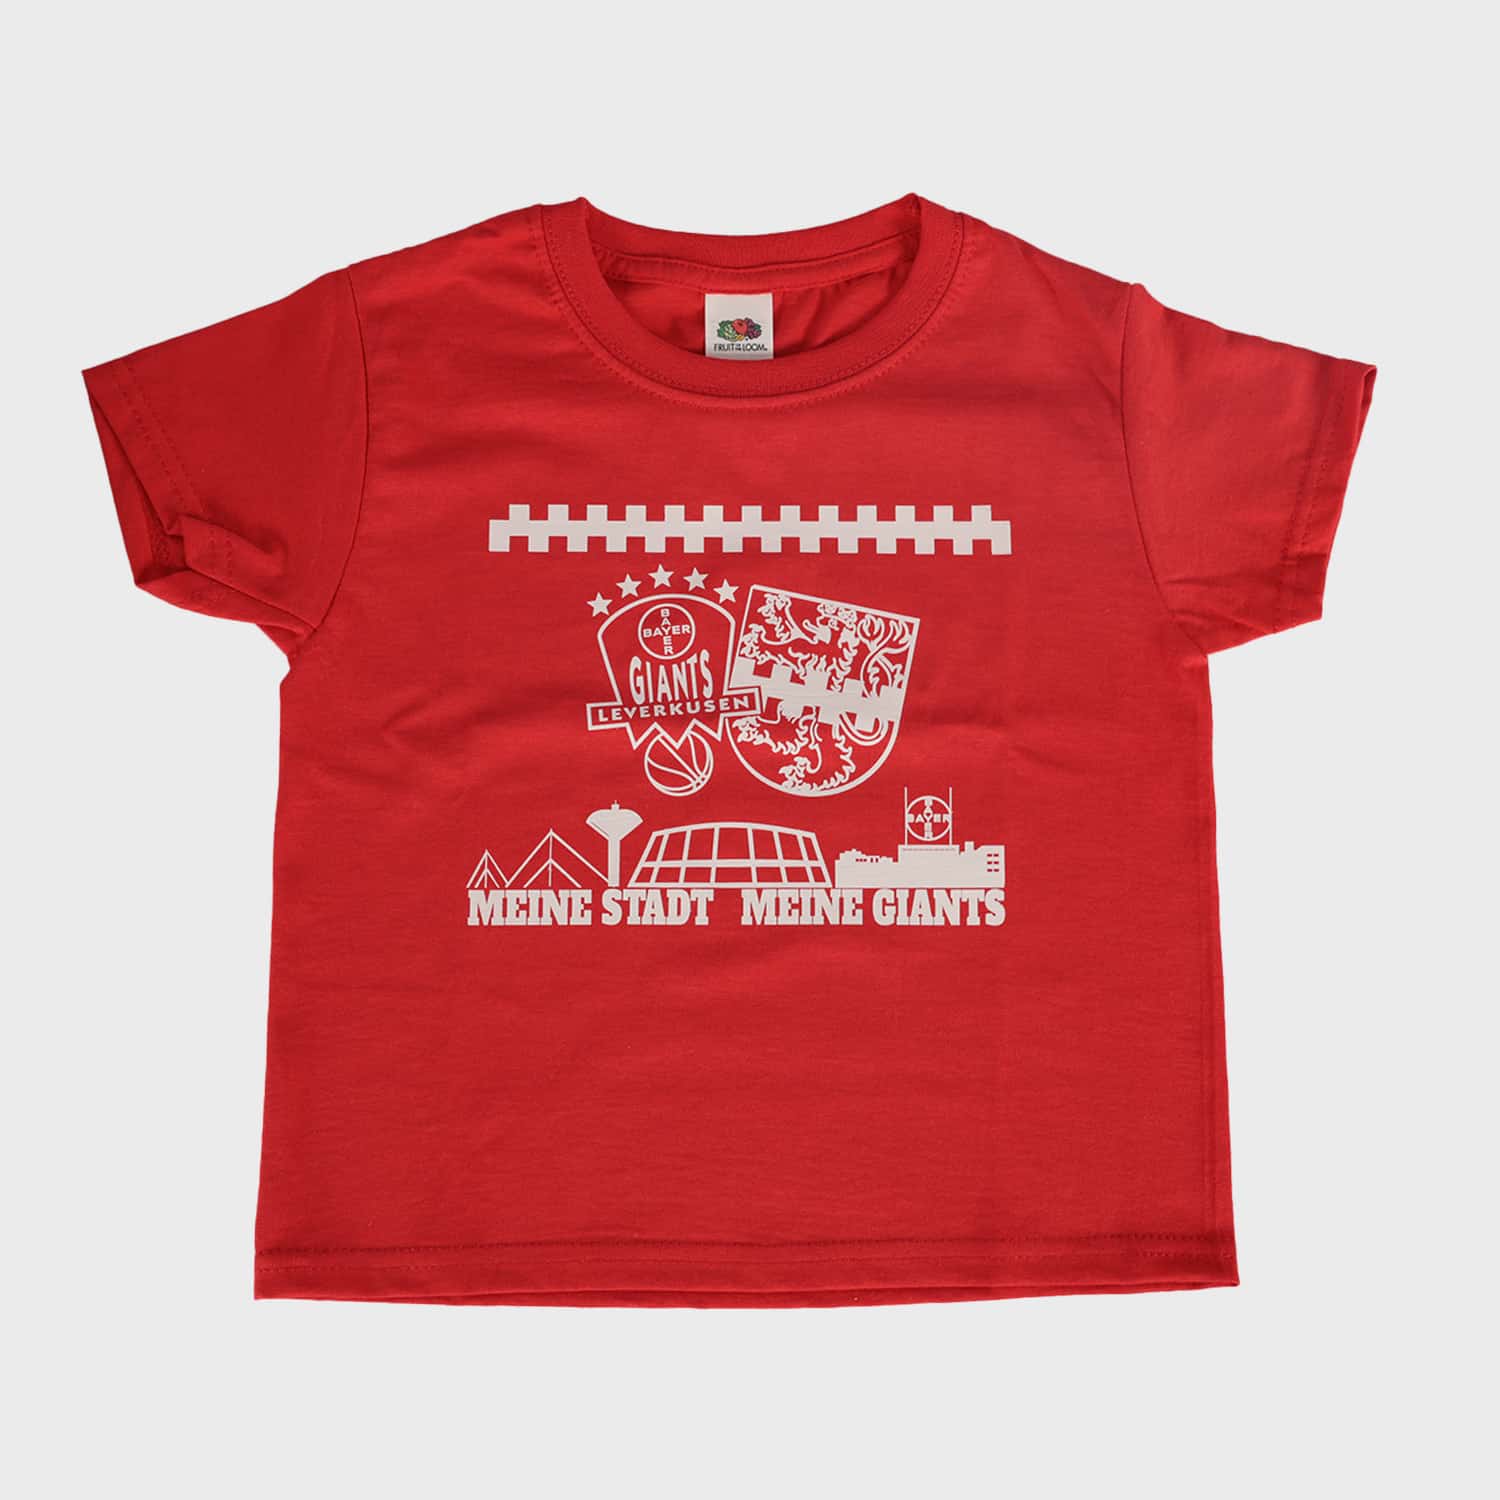 BAYER GIANTS Kinder Fan-Shirt